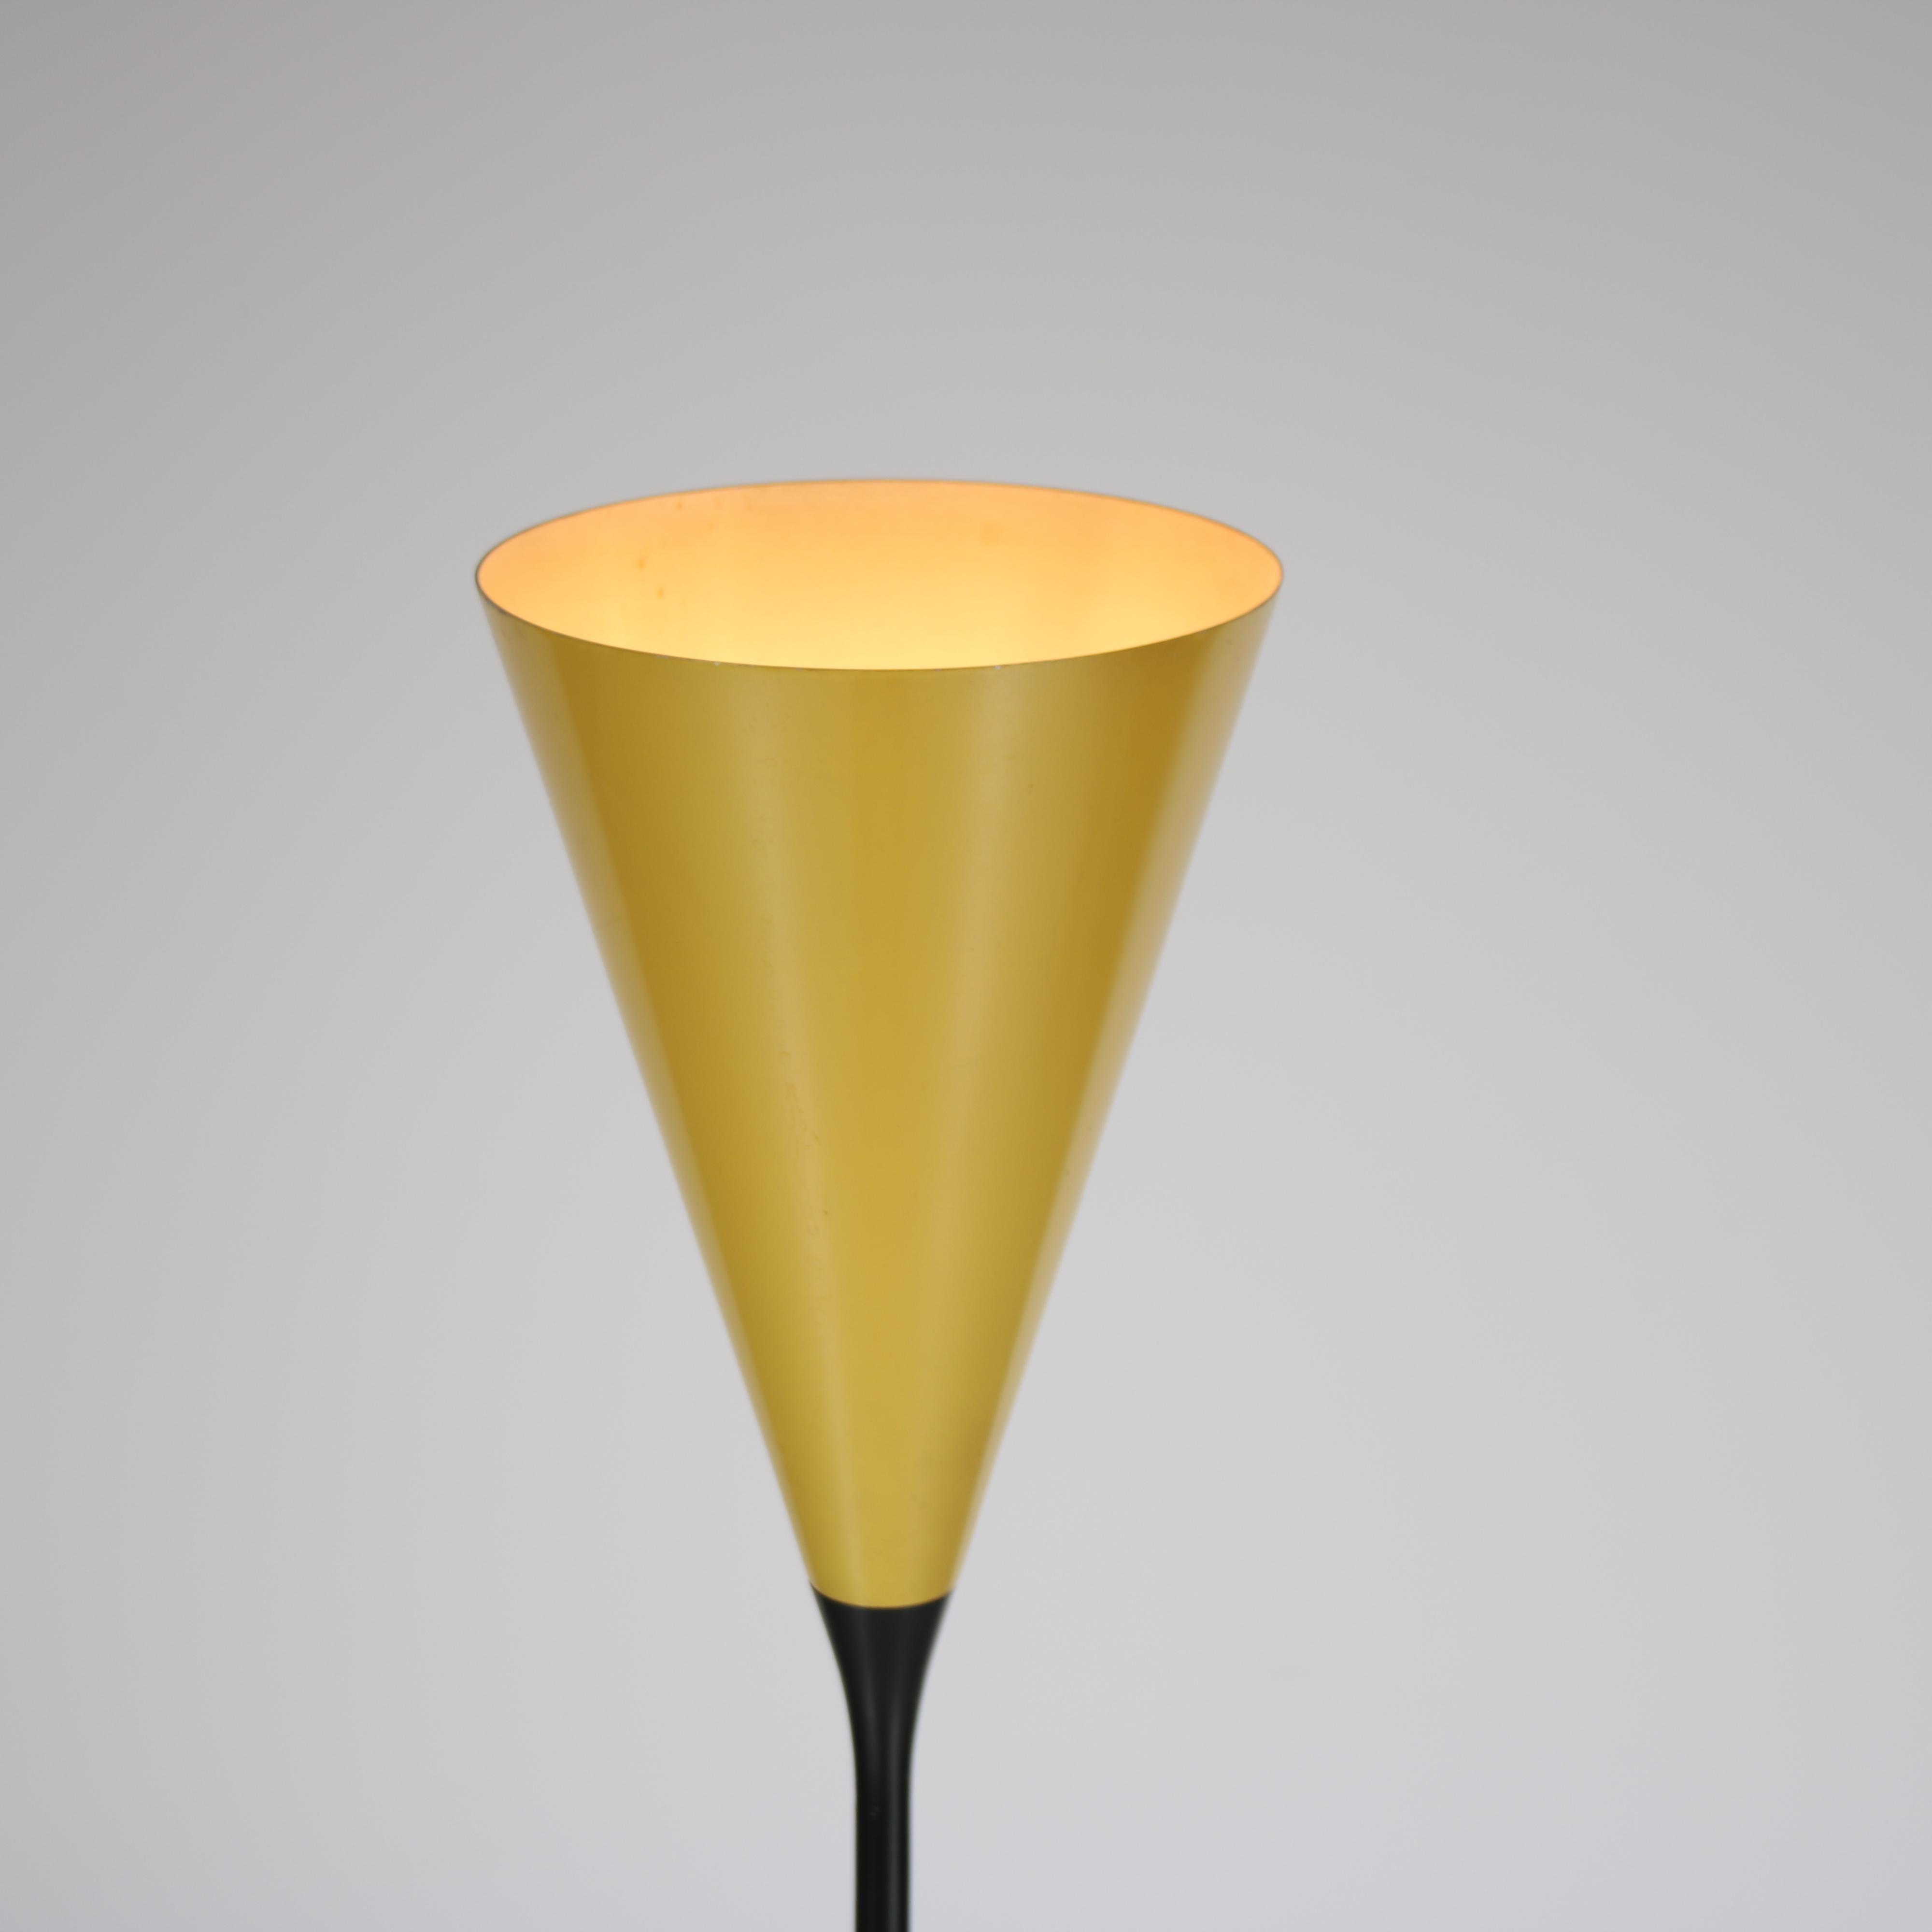 Gino Sarfatti Floor Lamp for Arteluce, Italy 1950 For Sale 6